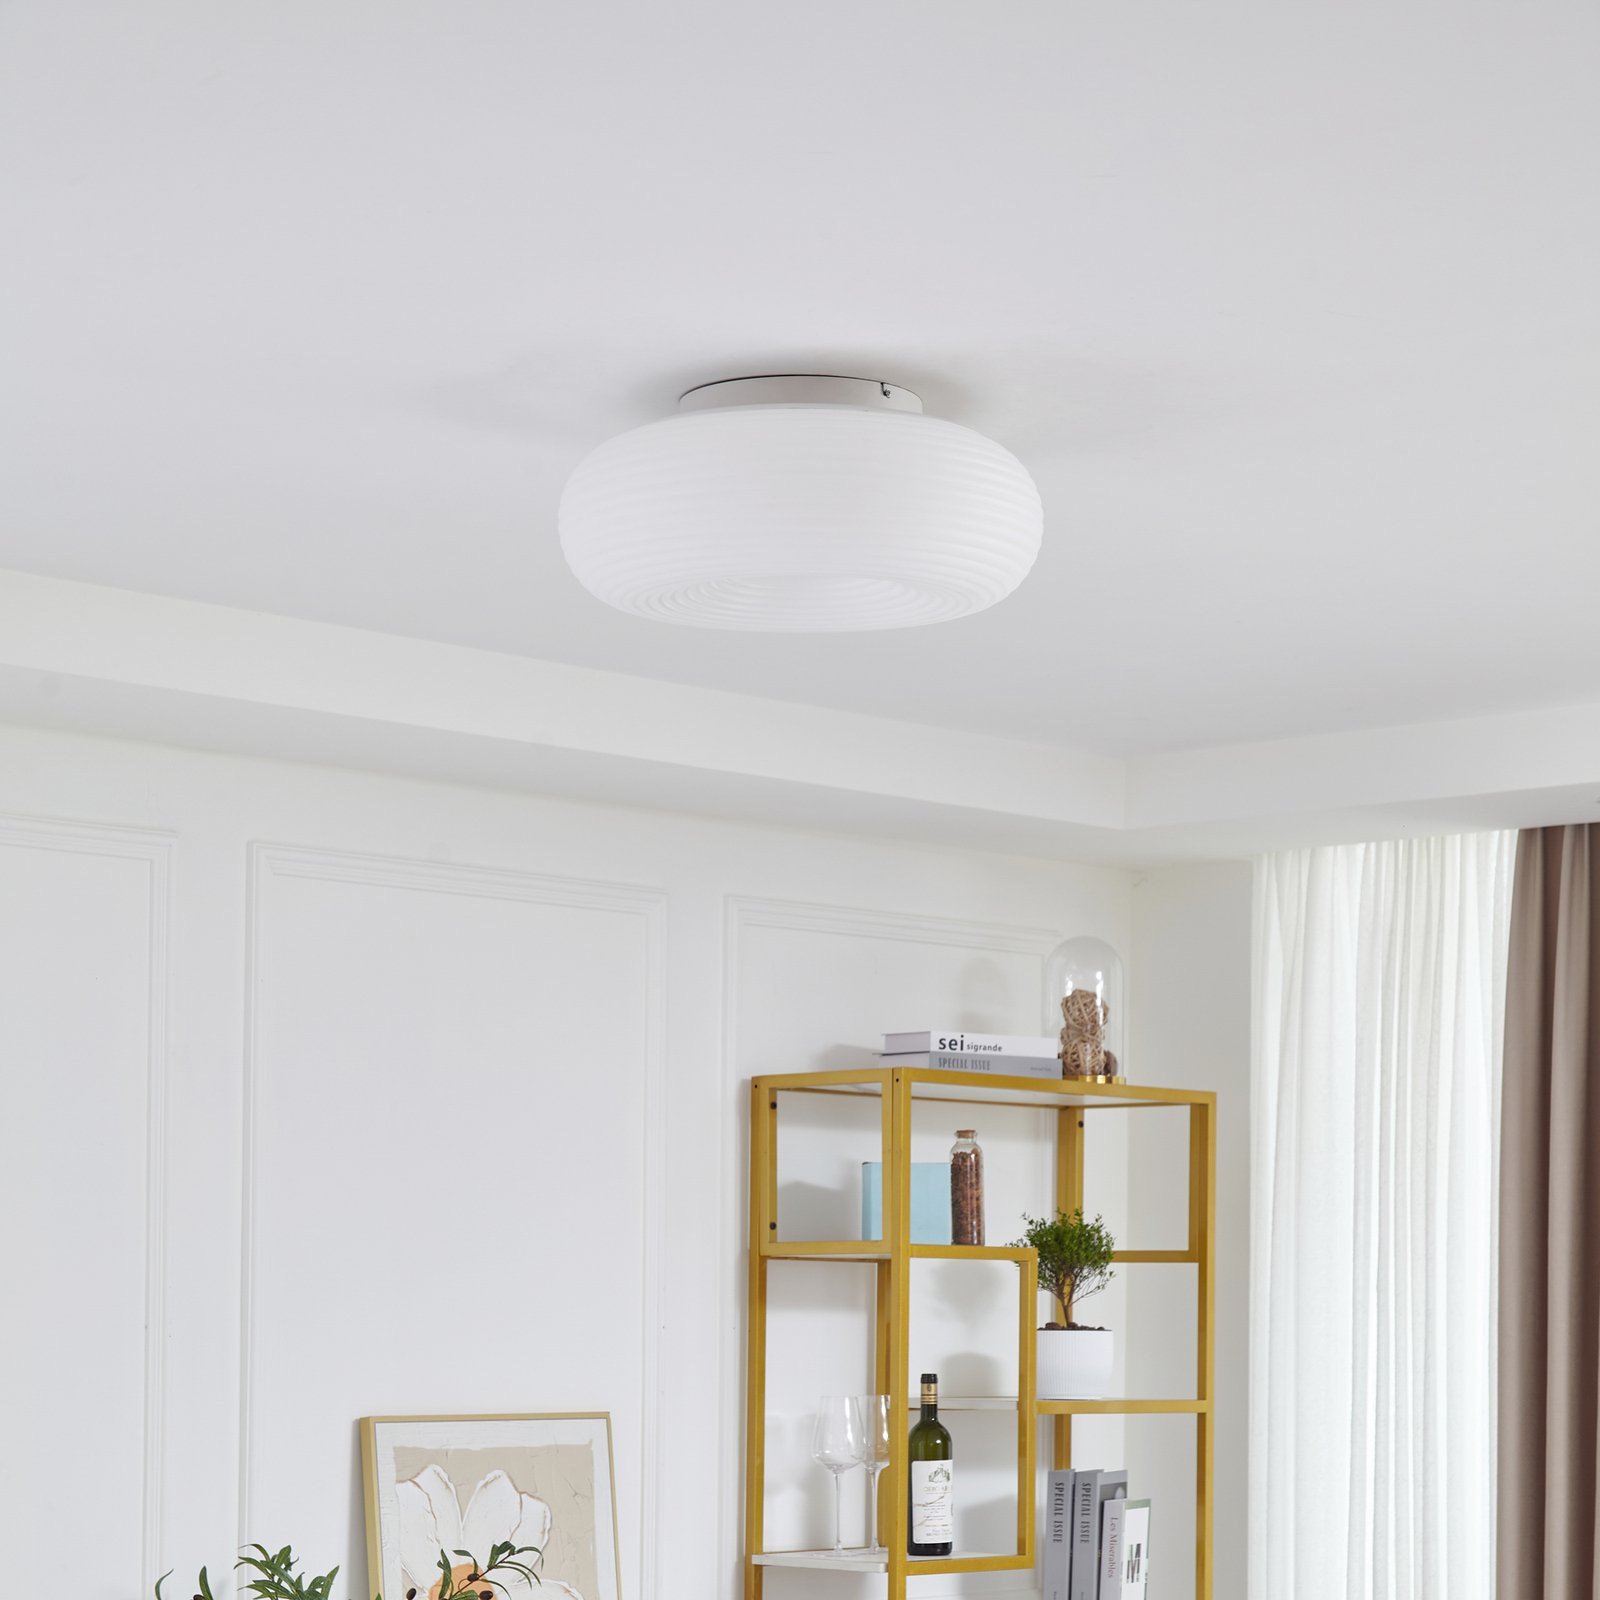 Lucande Smart LED ceiling light Bolti, white, RGBW, CCT, Tuya